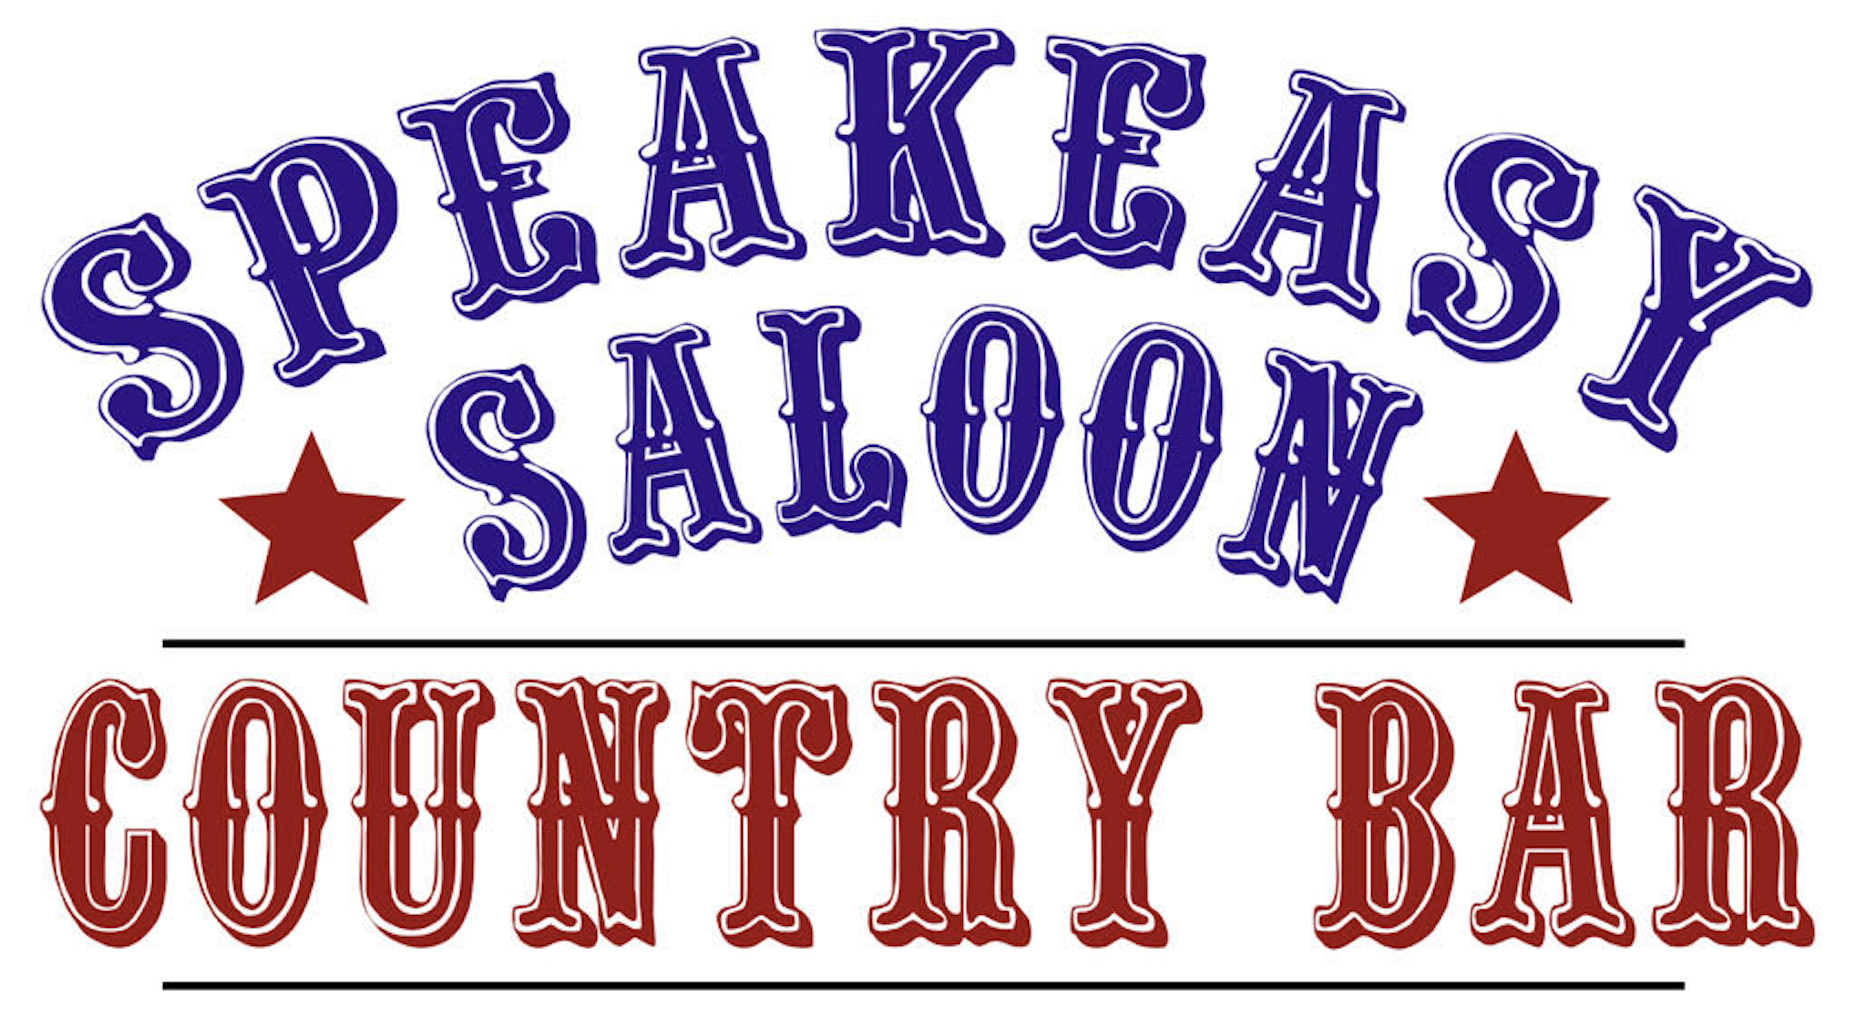 Speakeasy Saloon Country Bar Logo